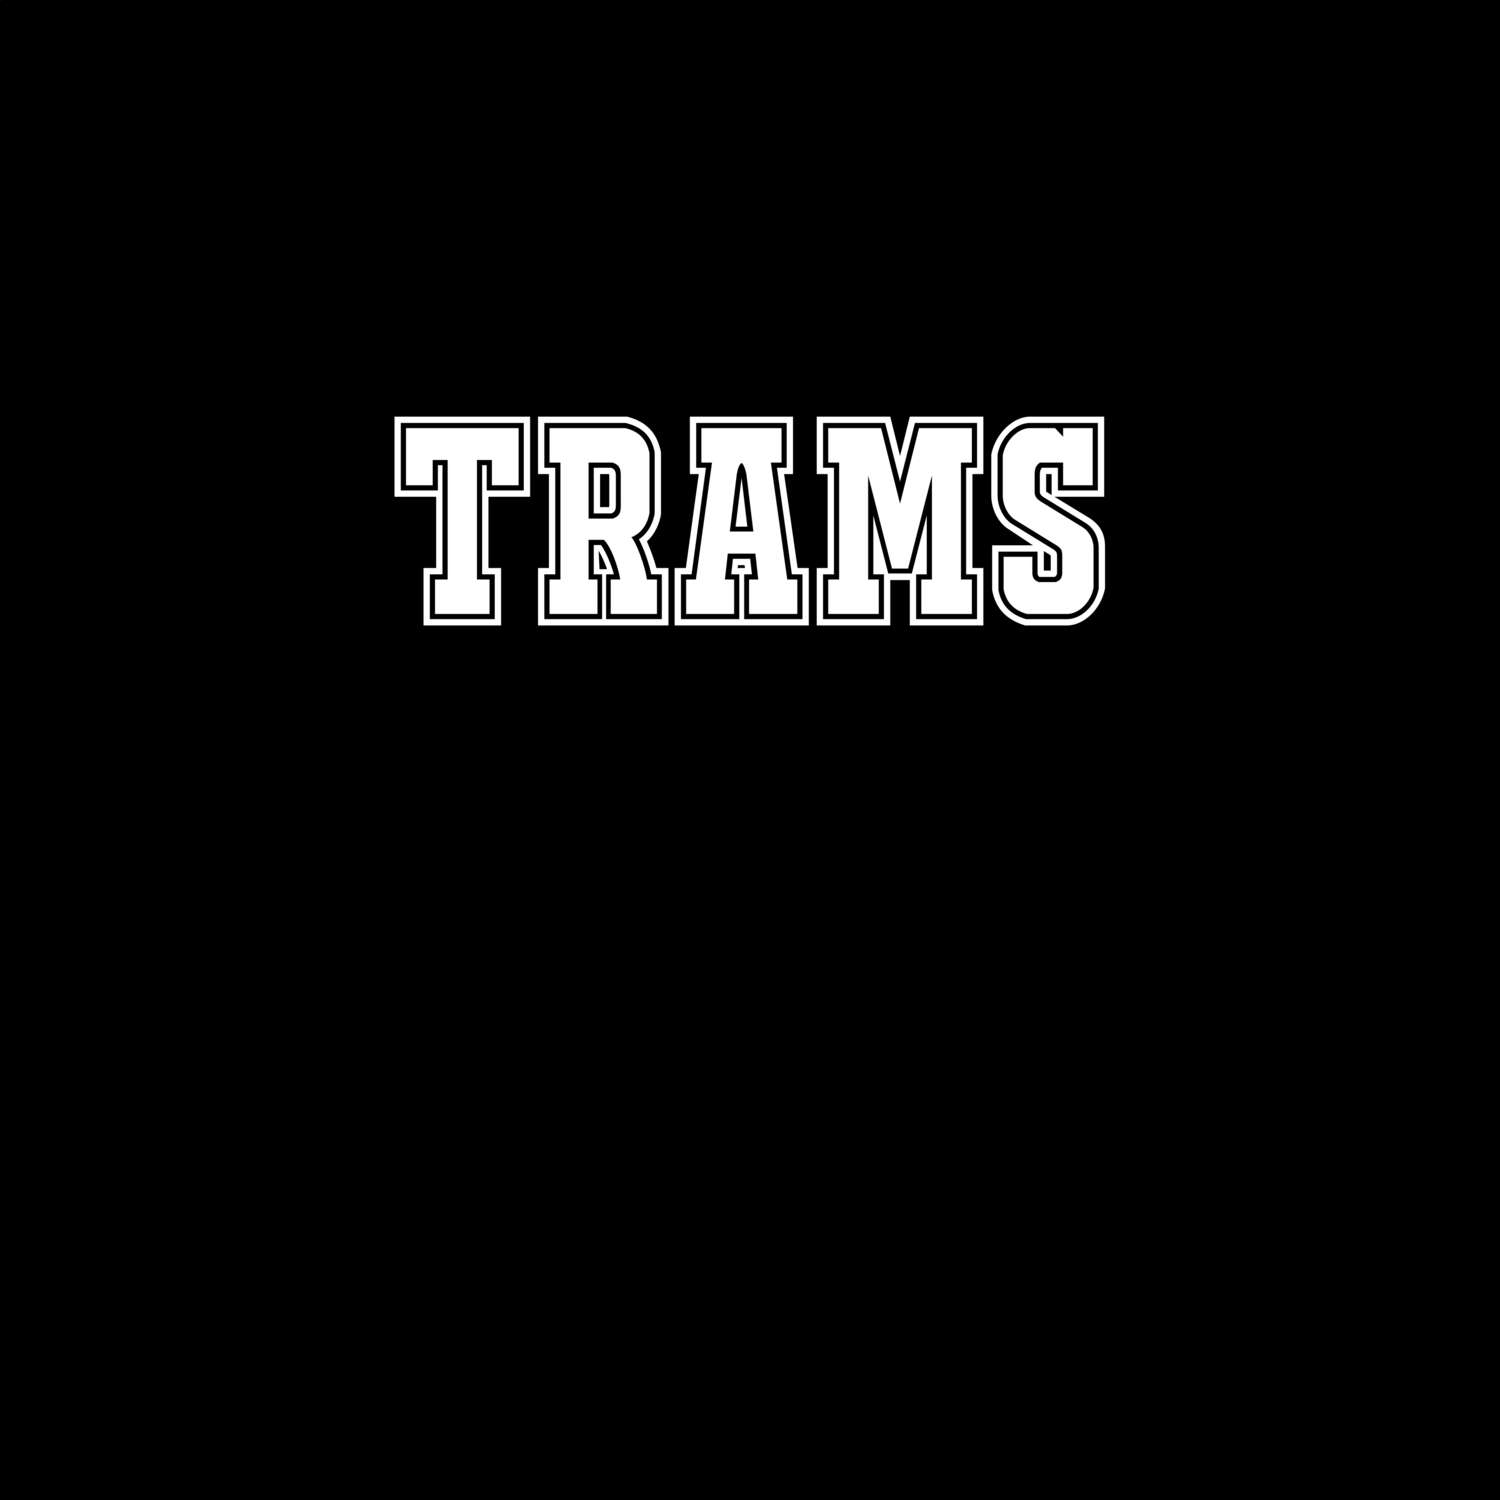 Trams T-Shirt »Classic«